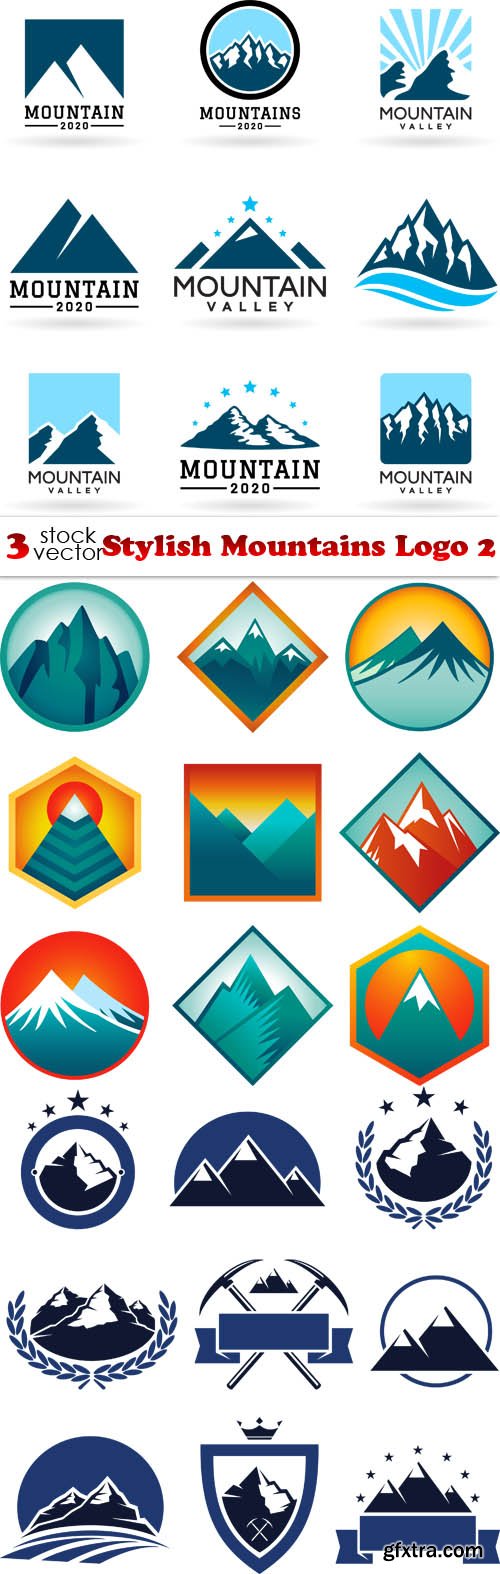 Vectors - Stylish Mountains Logo 2